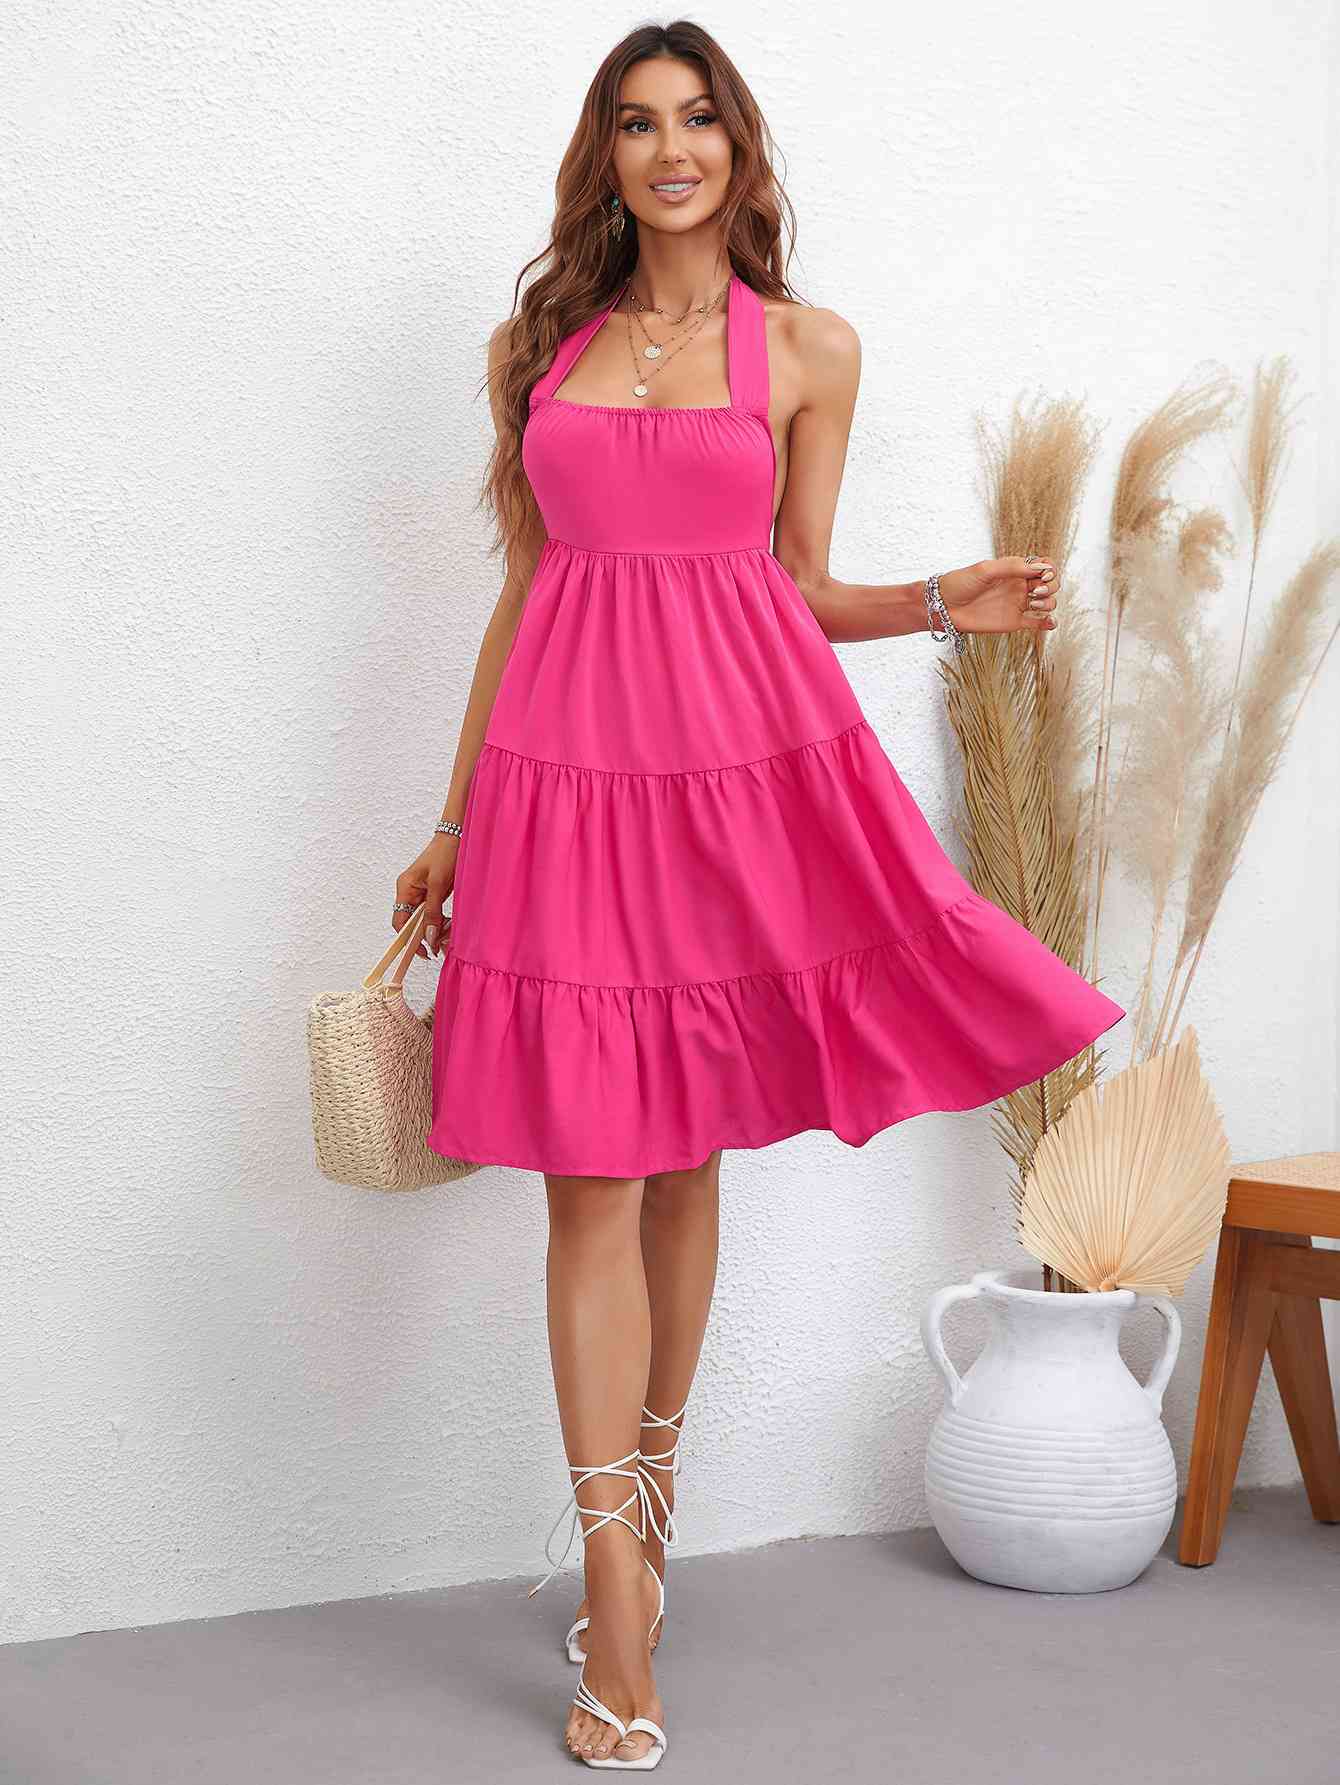 TEEK - Hot Pink Halter Neck Tiered Dress DRESS TEEK Trend   